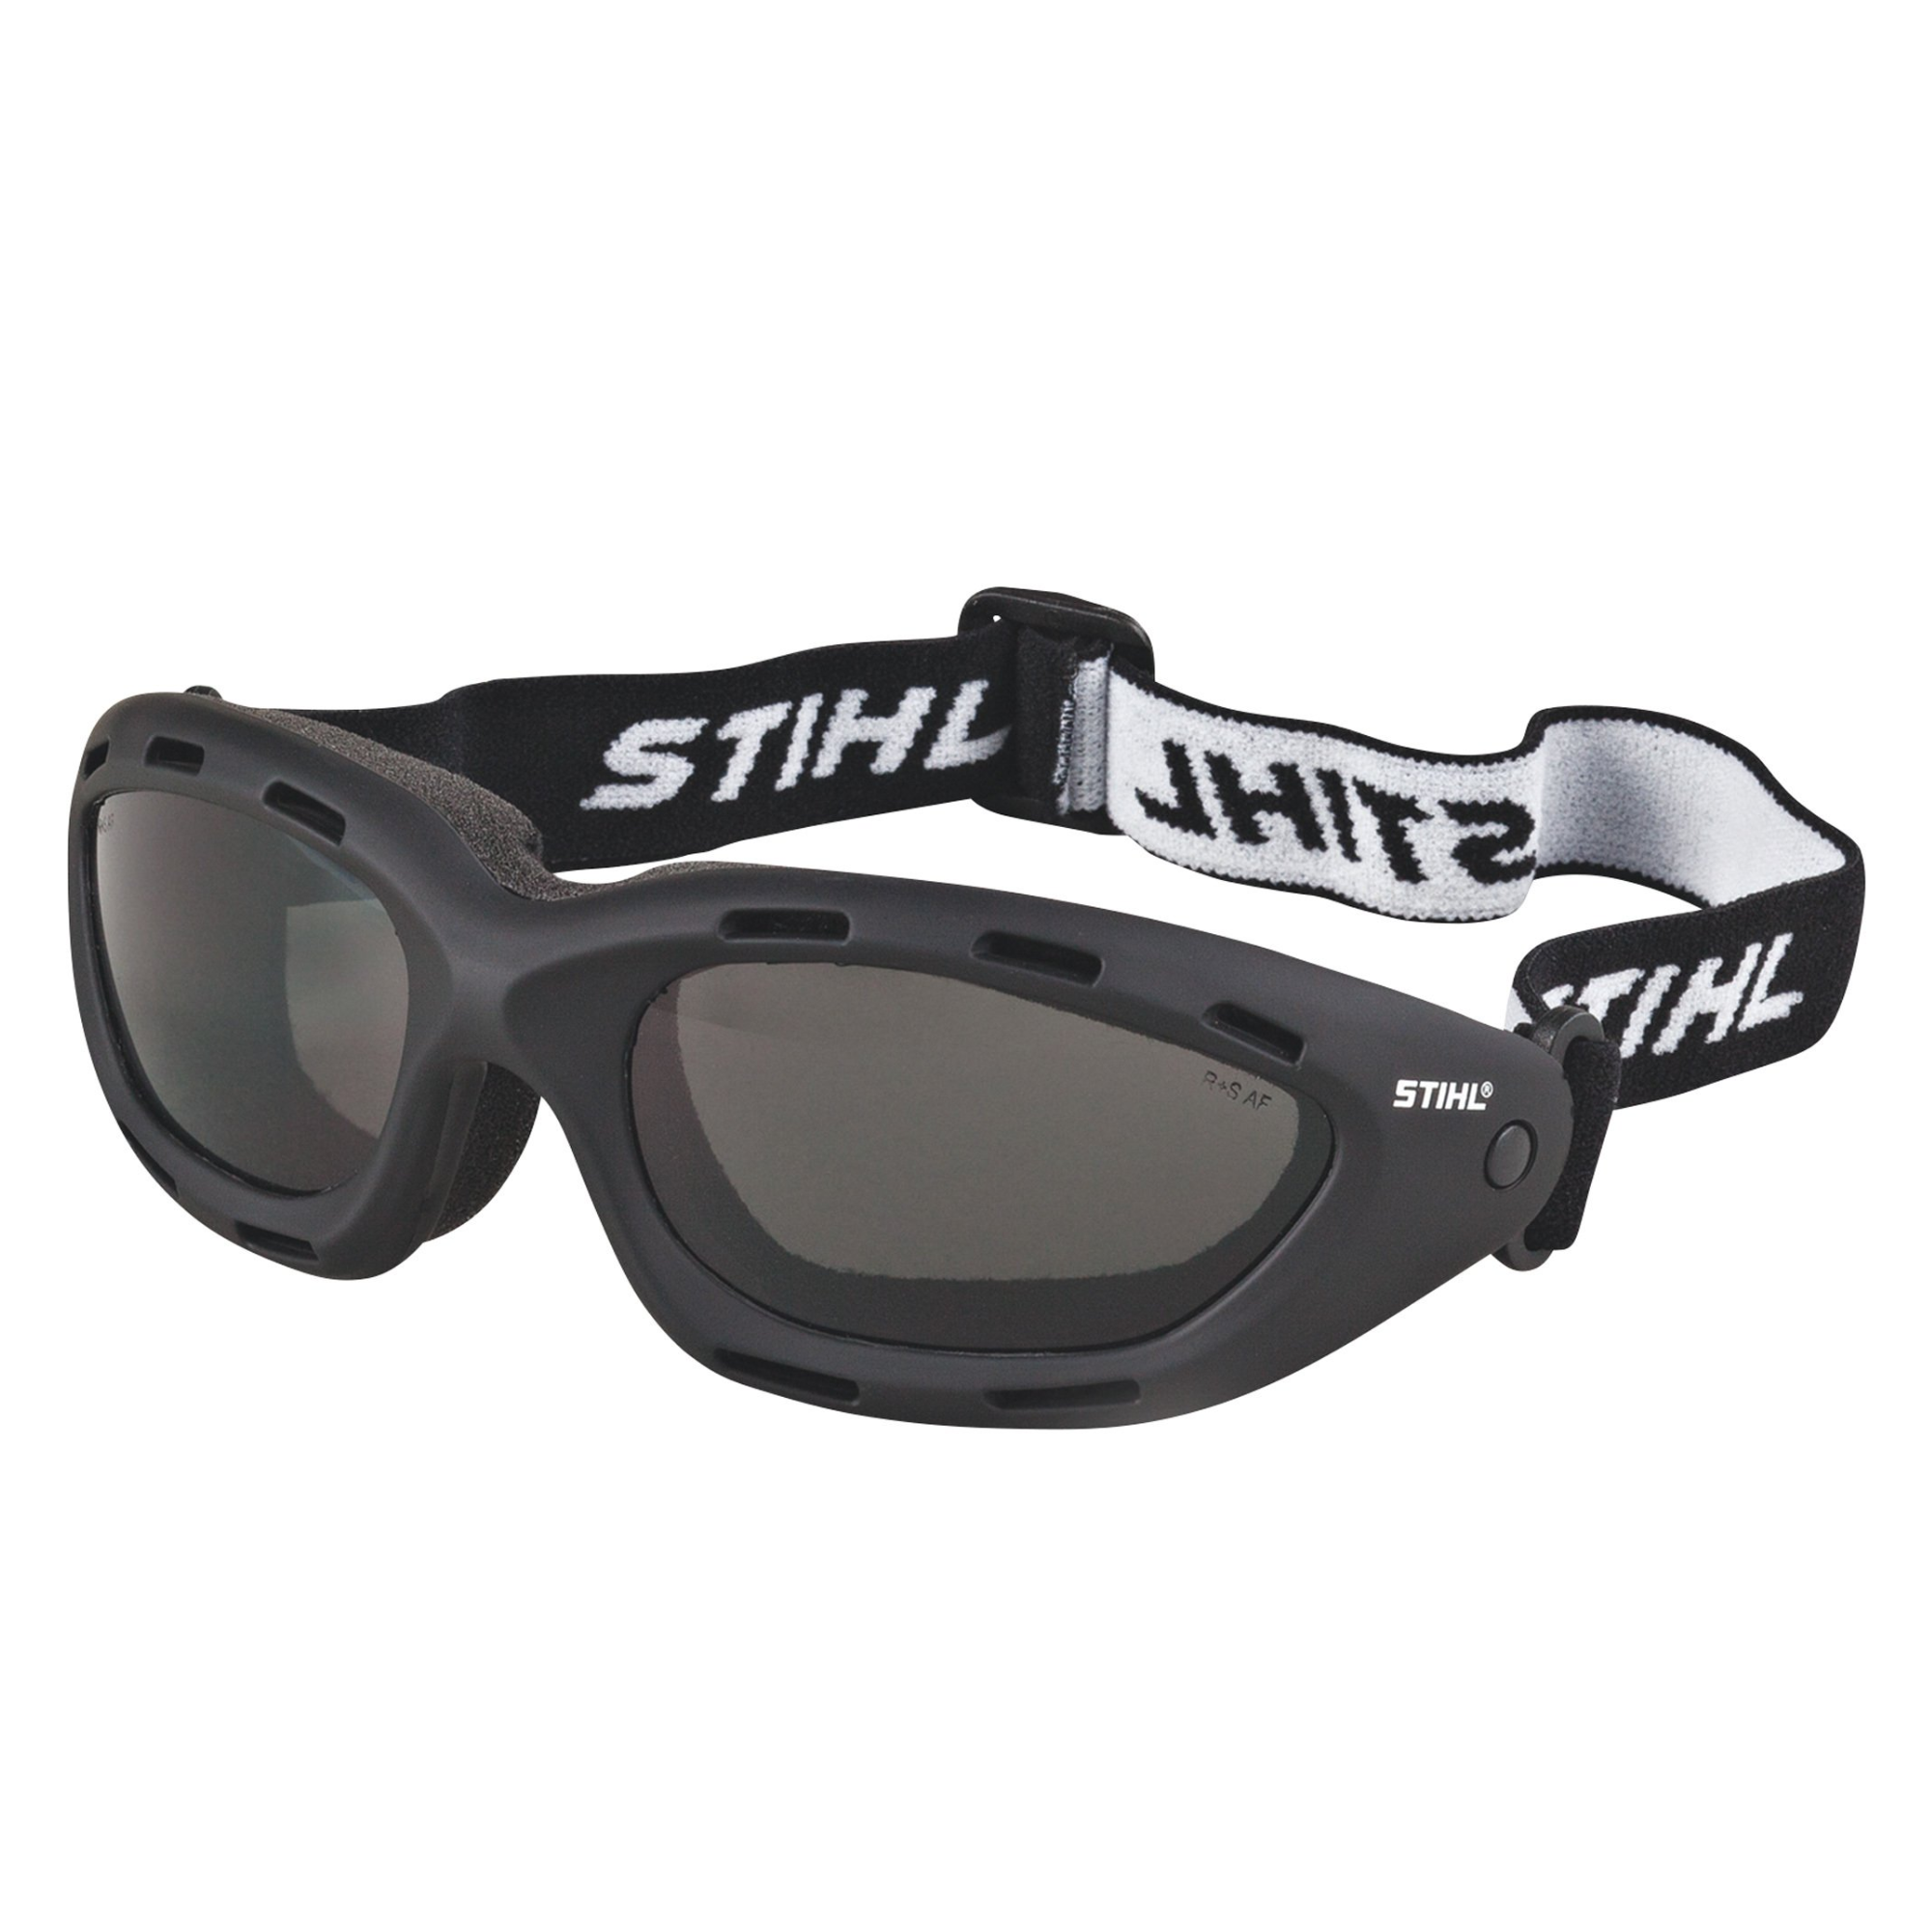 Stihl Pro Mark Goggles | Smoke Lens | 7010 884 0363